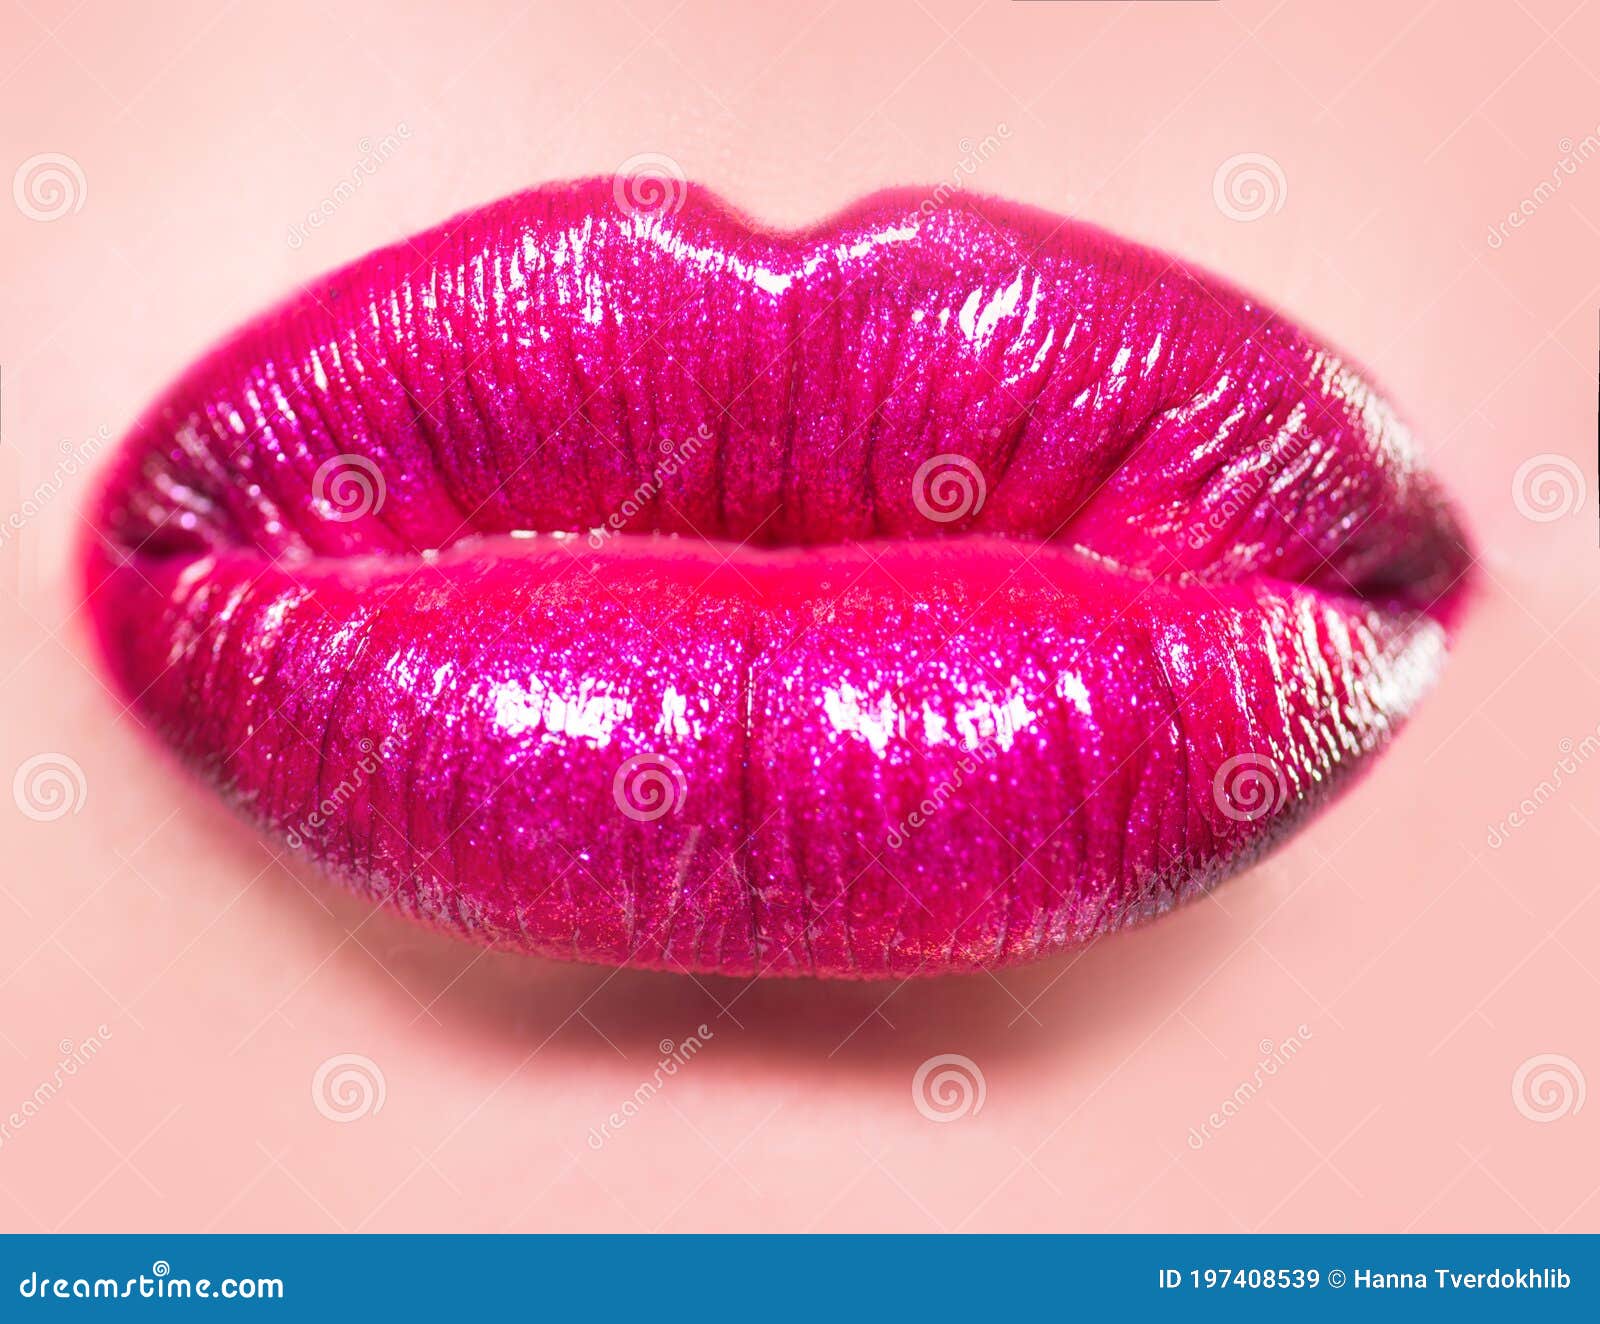 conectați Însorit rahat  Pink Lips. Hot Lipstick Cosmetics. Full Lips on Woman Face. Luxury Icon.  Beautiful Girl Close Up Stock Image - Image of matt, macro: 197408539